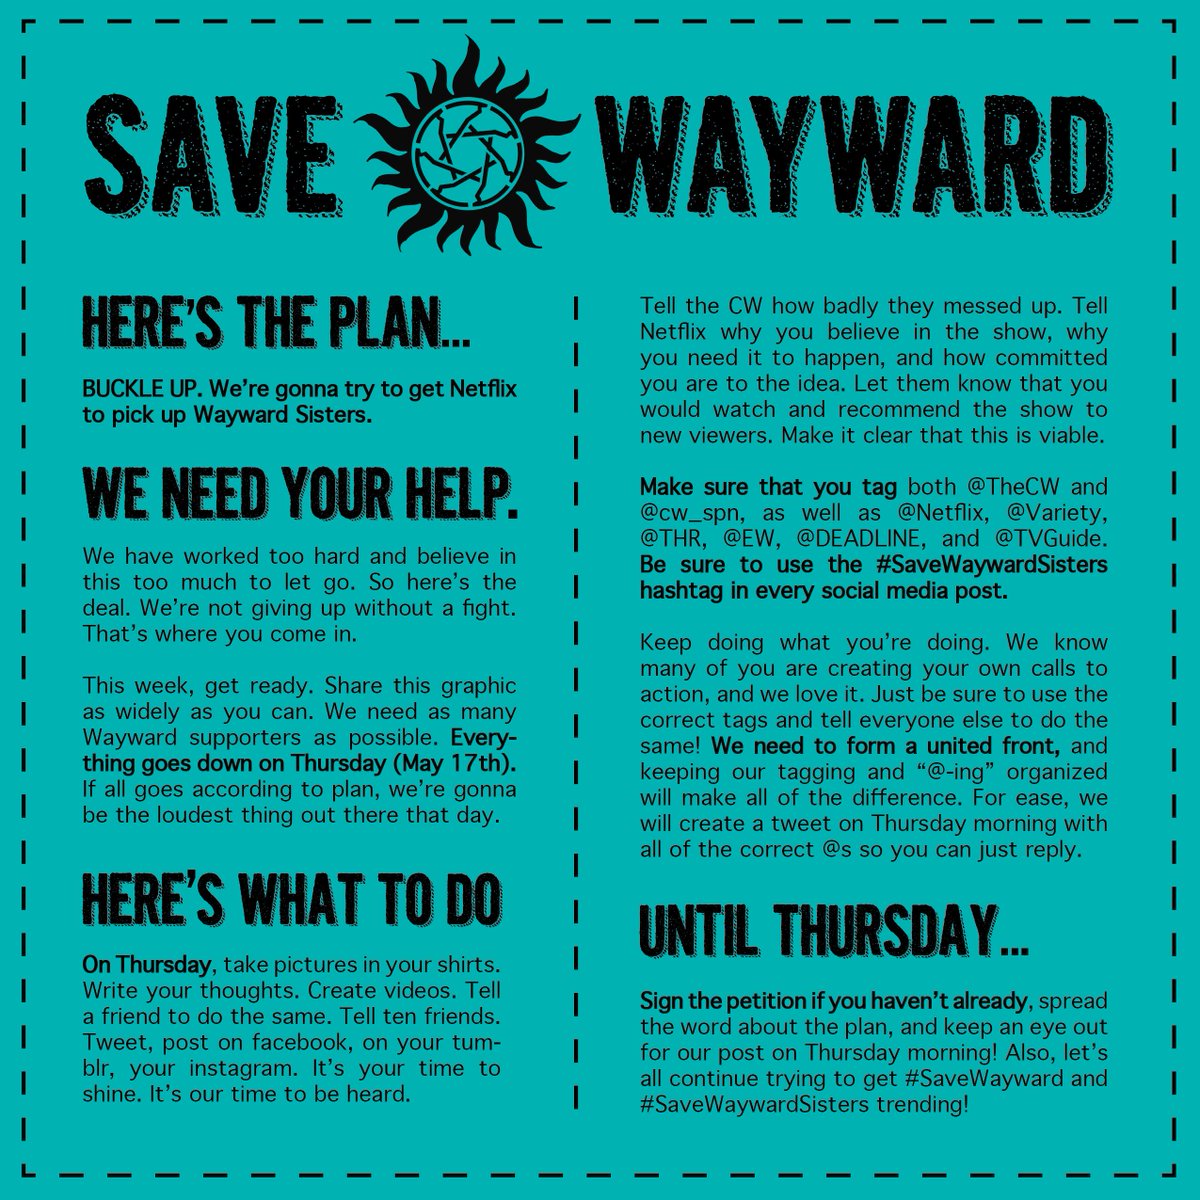 RT @WaywardDaughtrs: SIGNAL BOOST! #SaveWaywardSisters https://t.co/YGsbgVK7SE https://t.co/aMBKmfLxs2